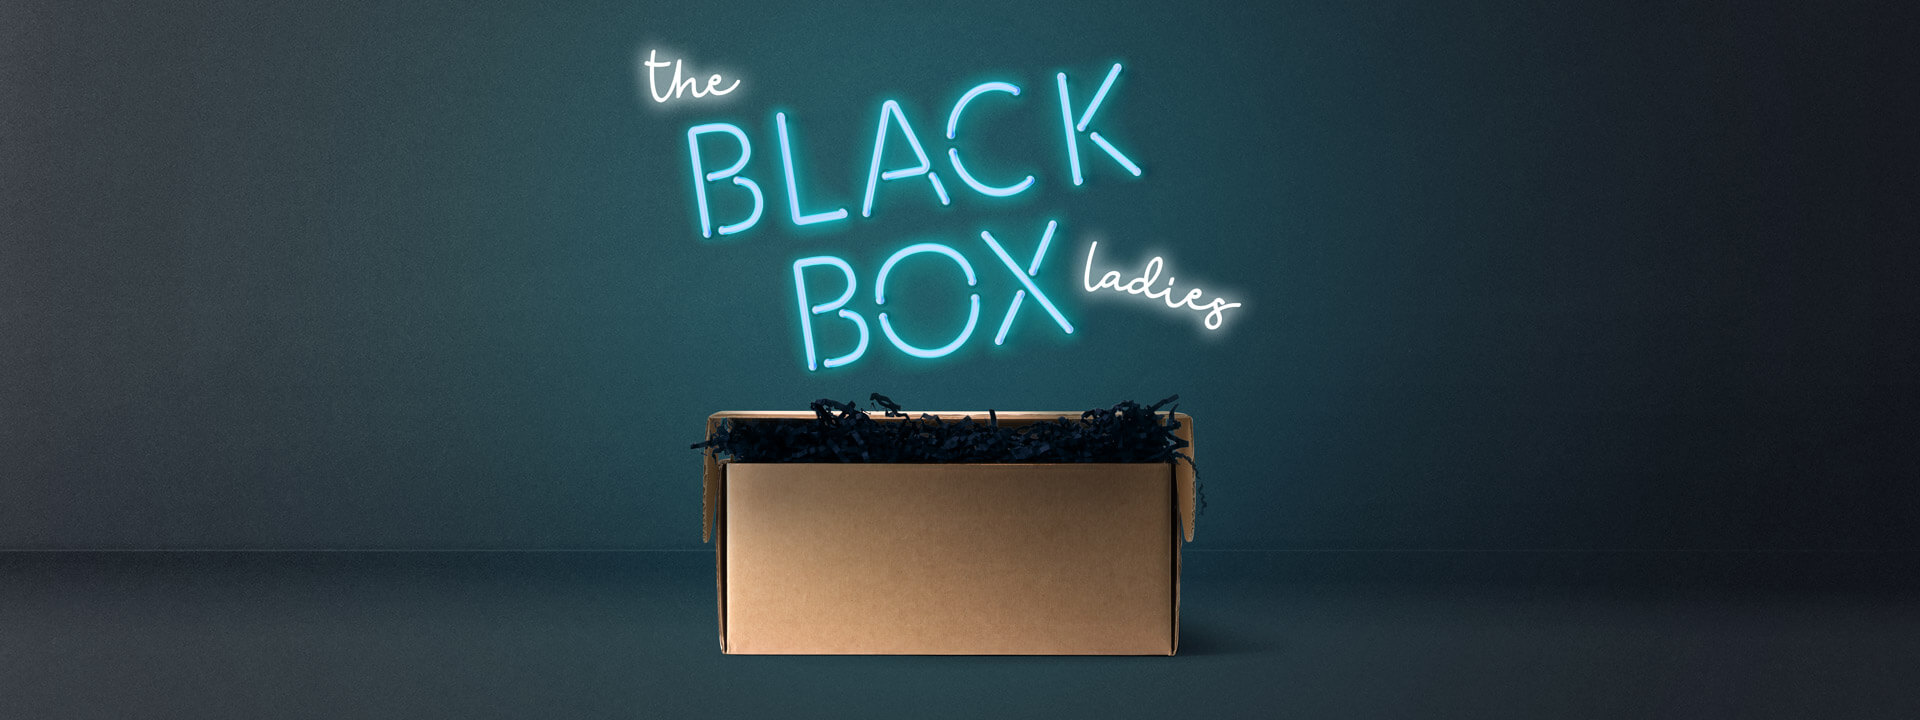 Black Box Ladies